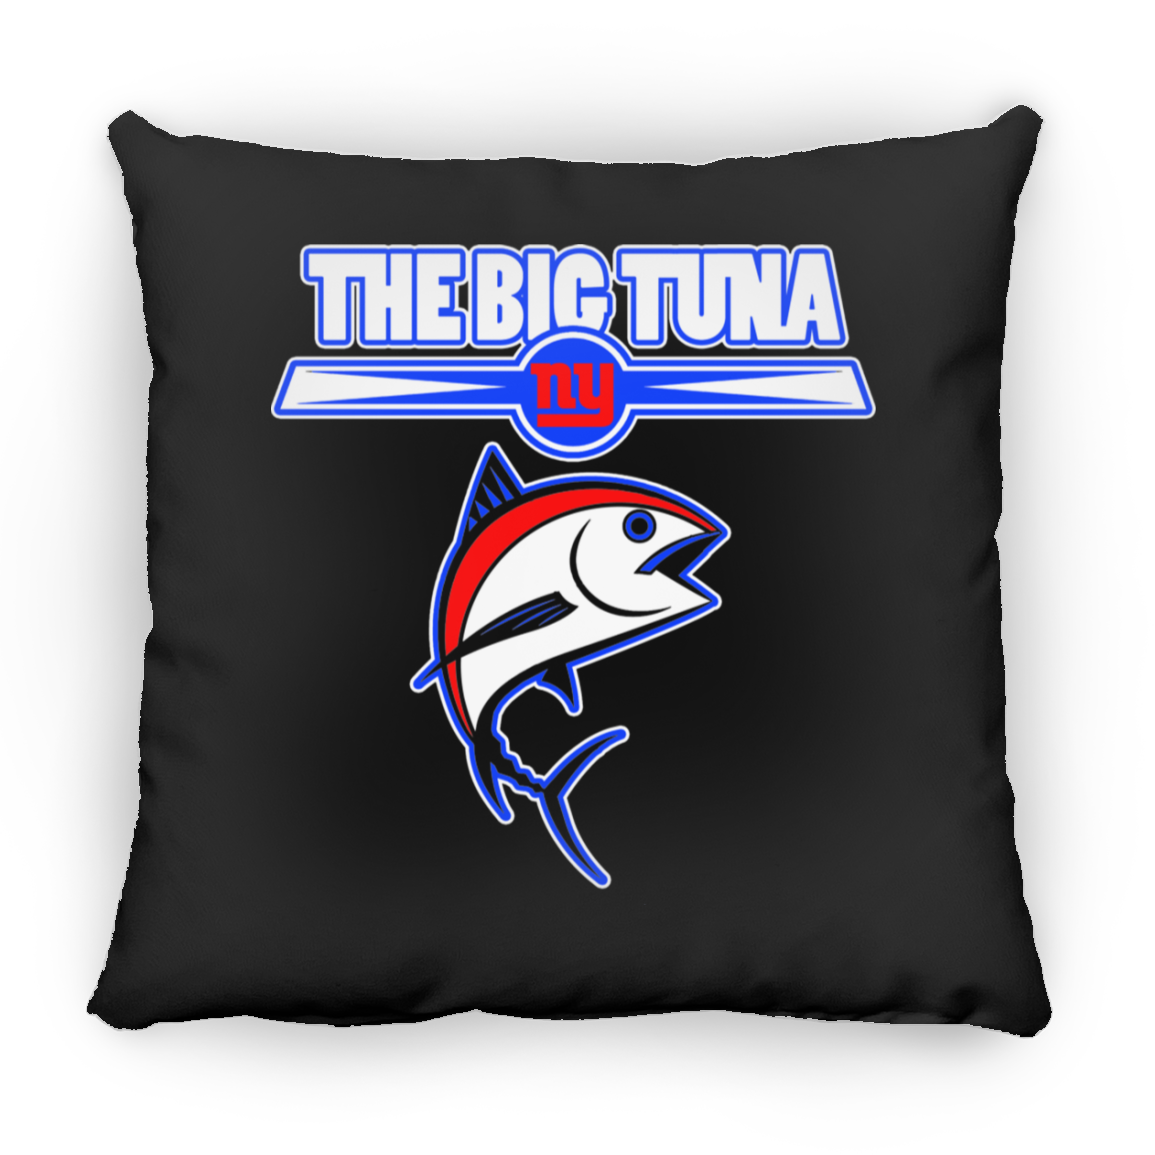 ArtichokeUSA Custom Design. The Big Tuna. Bill Parcell Tribute. NY Giants Fan Art. Square Pillow 18x18